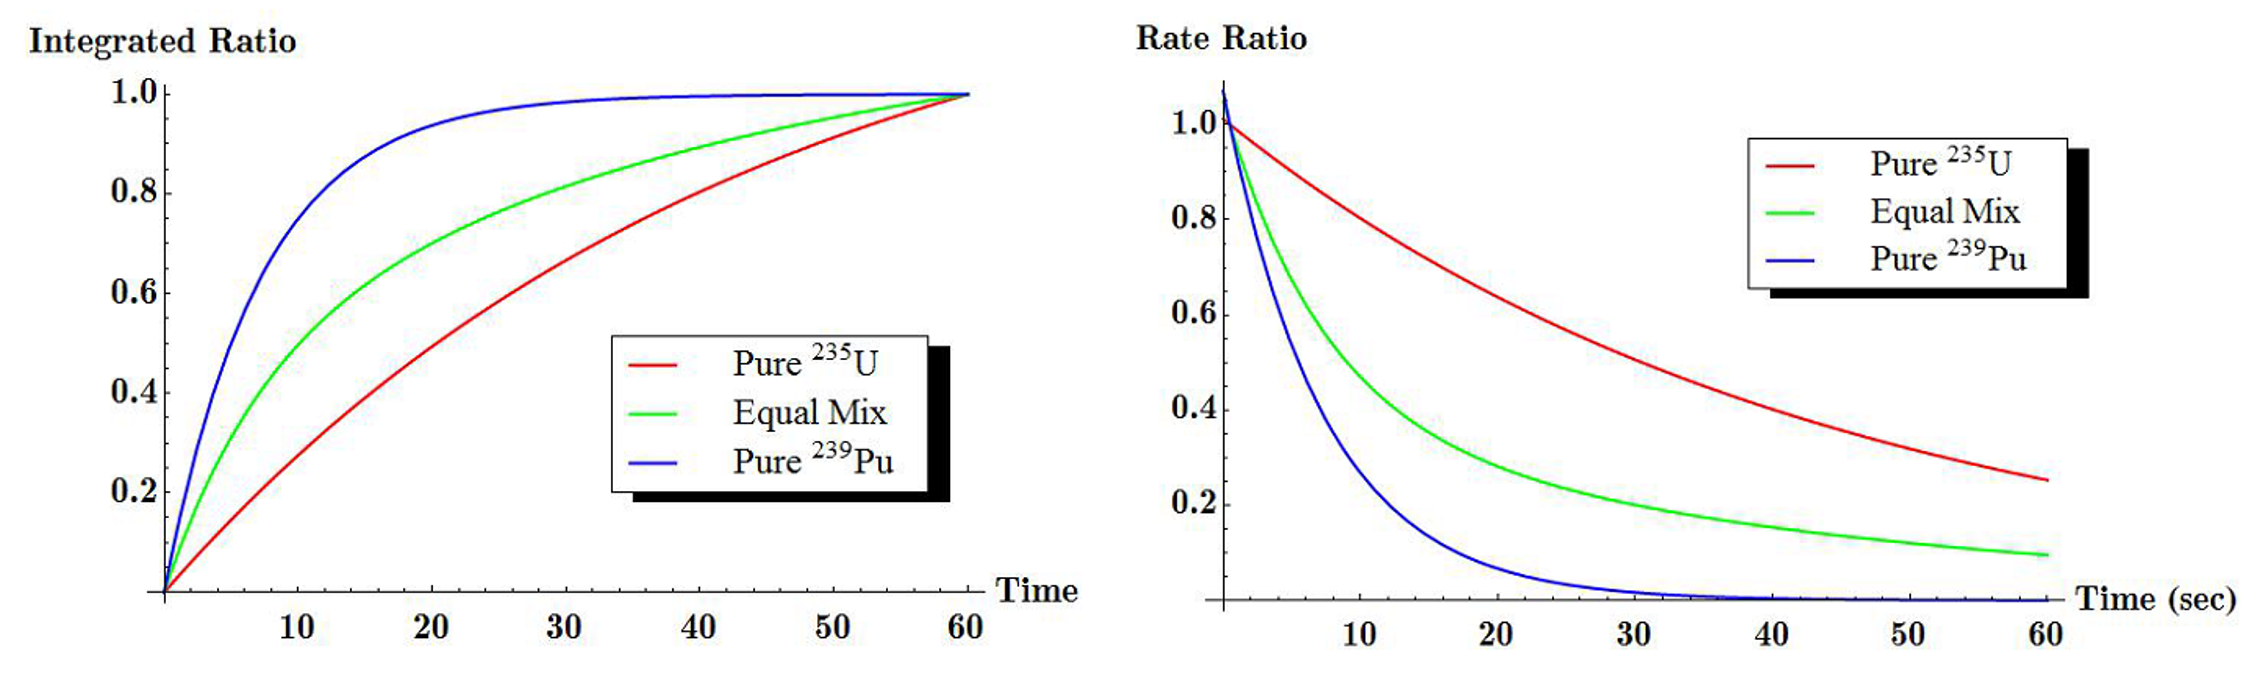 Temporal Gamma-ray Spectroscopy ratios